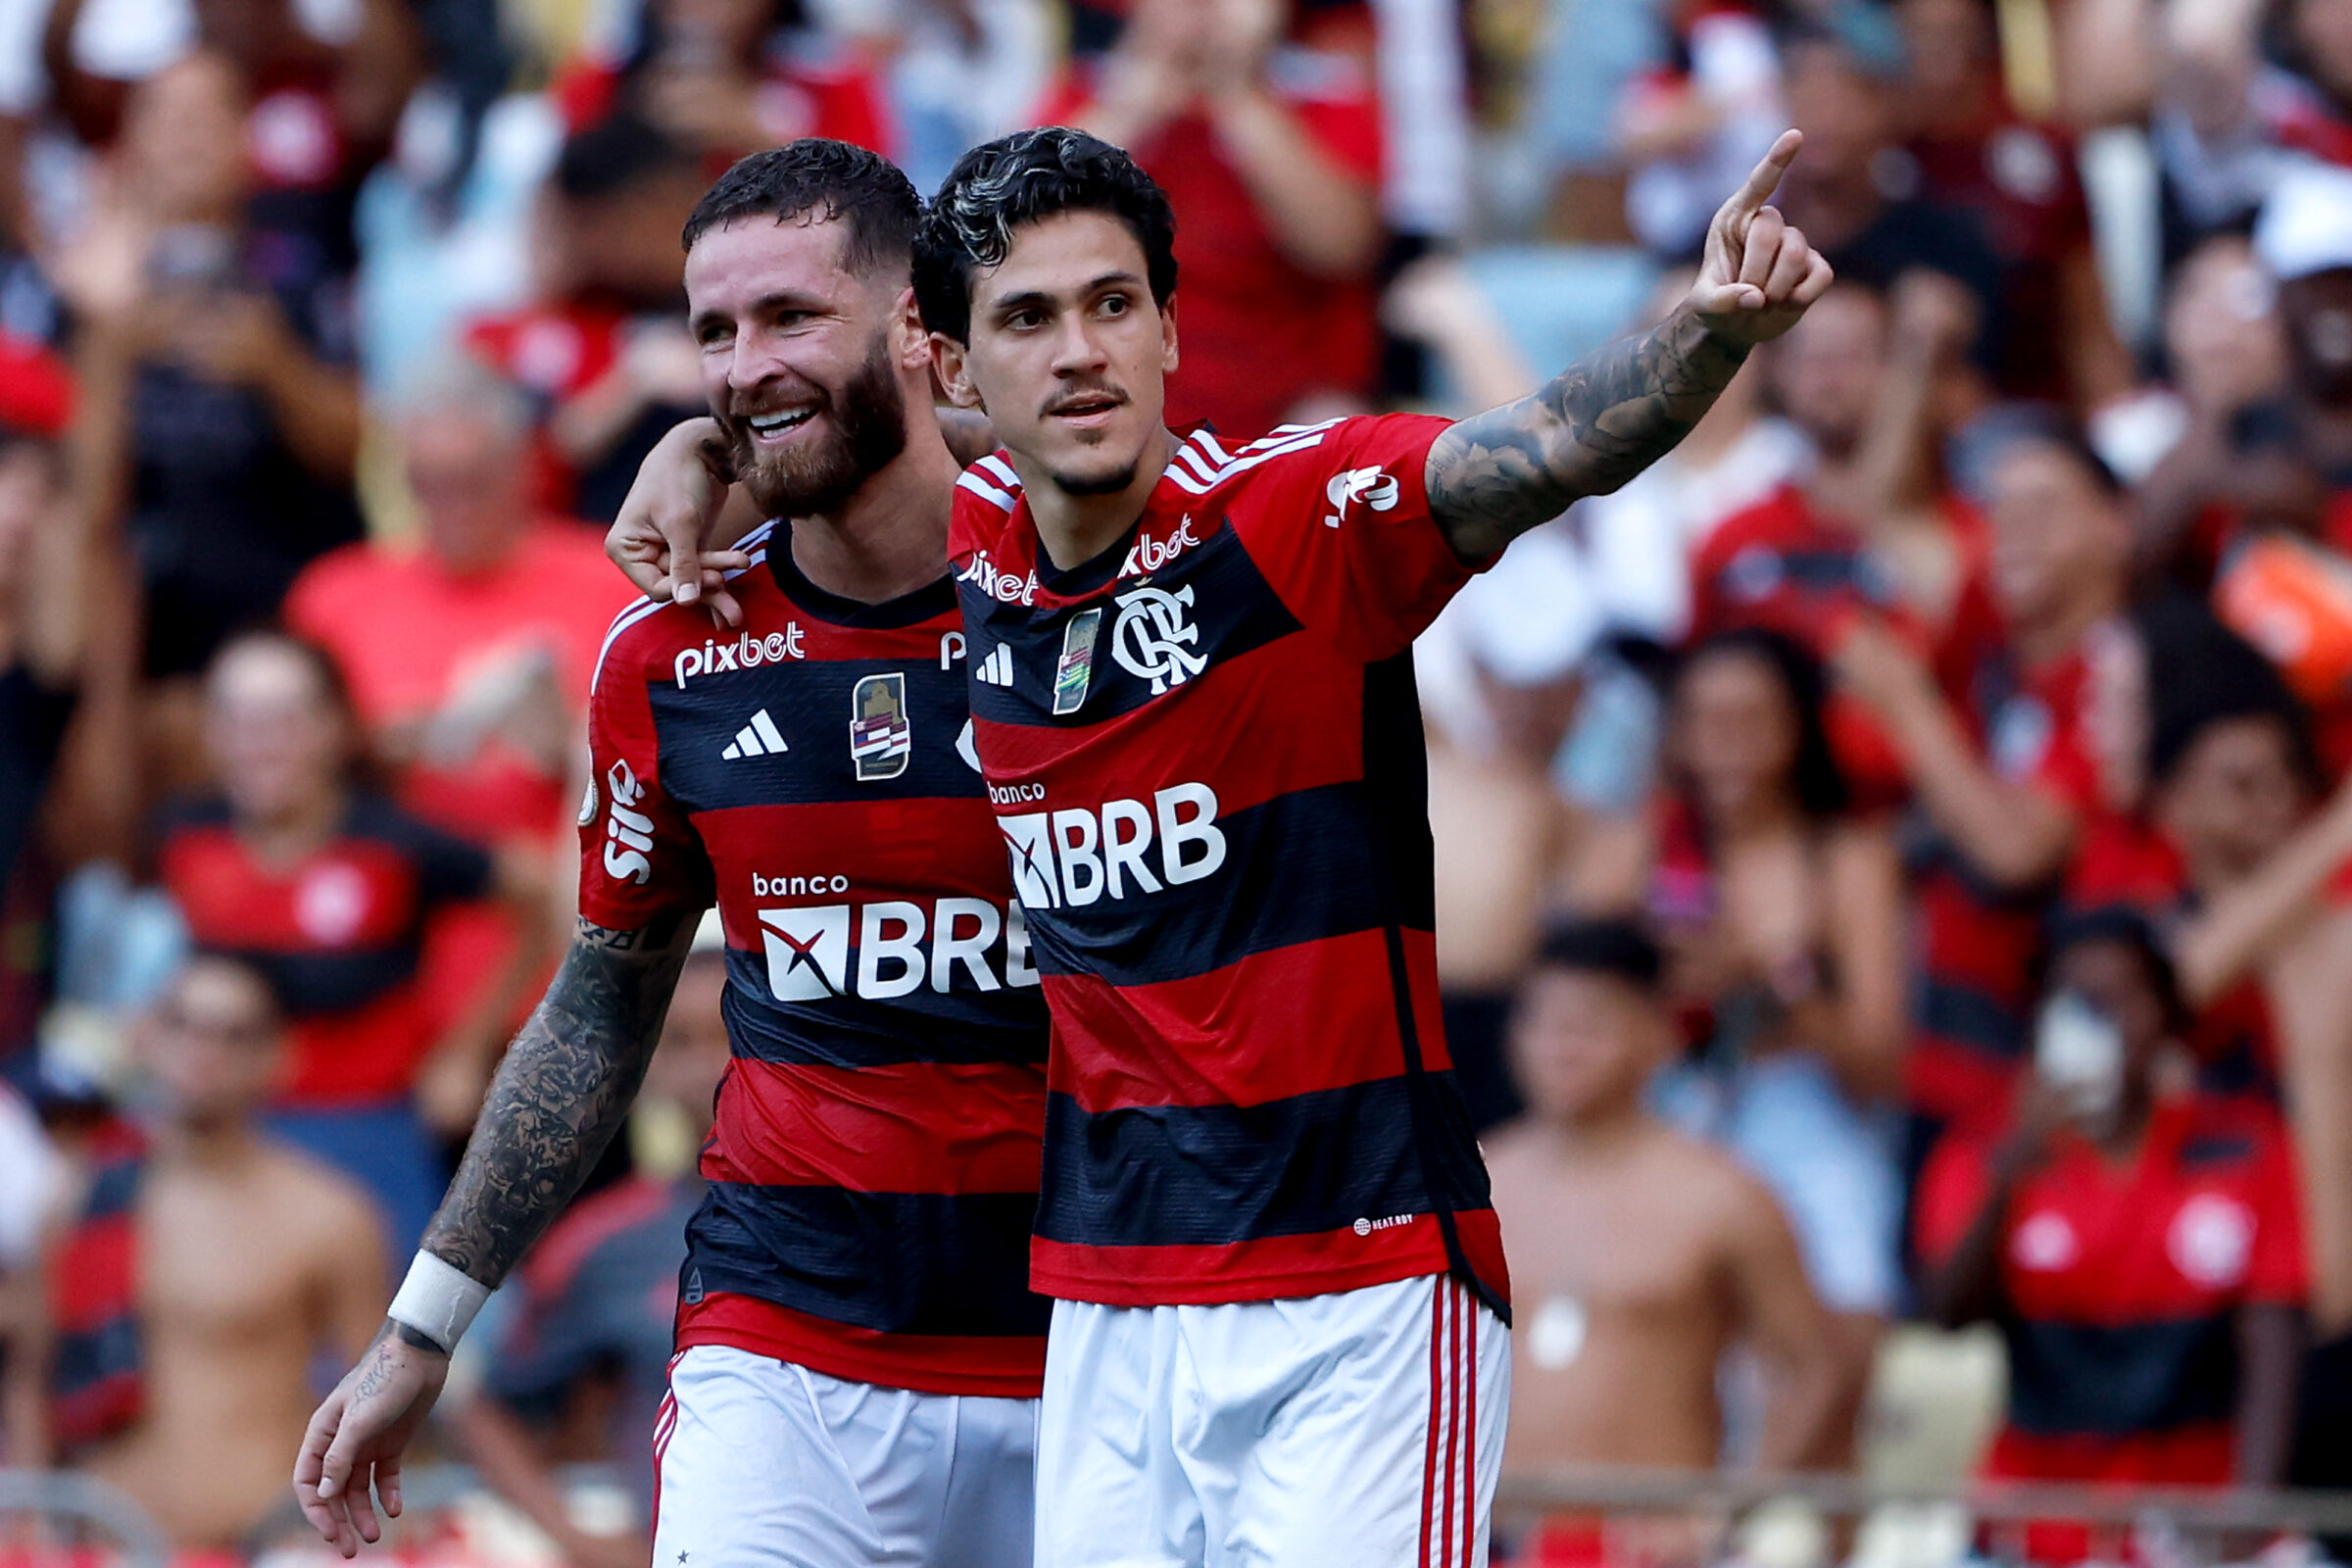 Titular do Flamengo vira desfalque para jogo contra o Cruzeiro